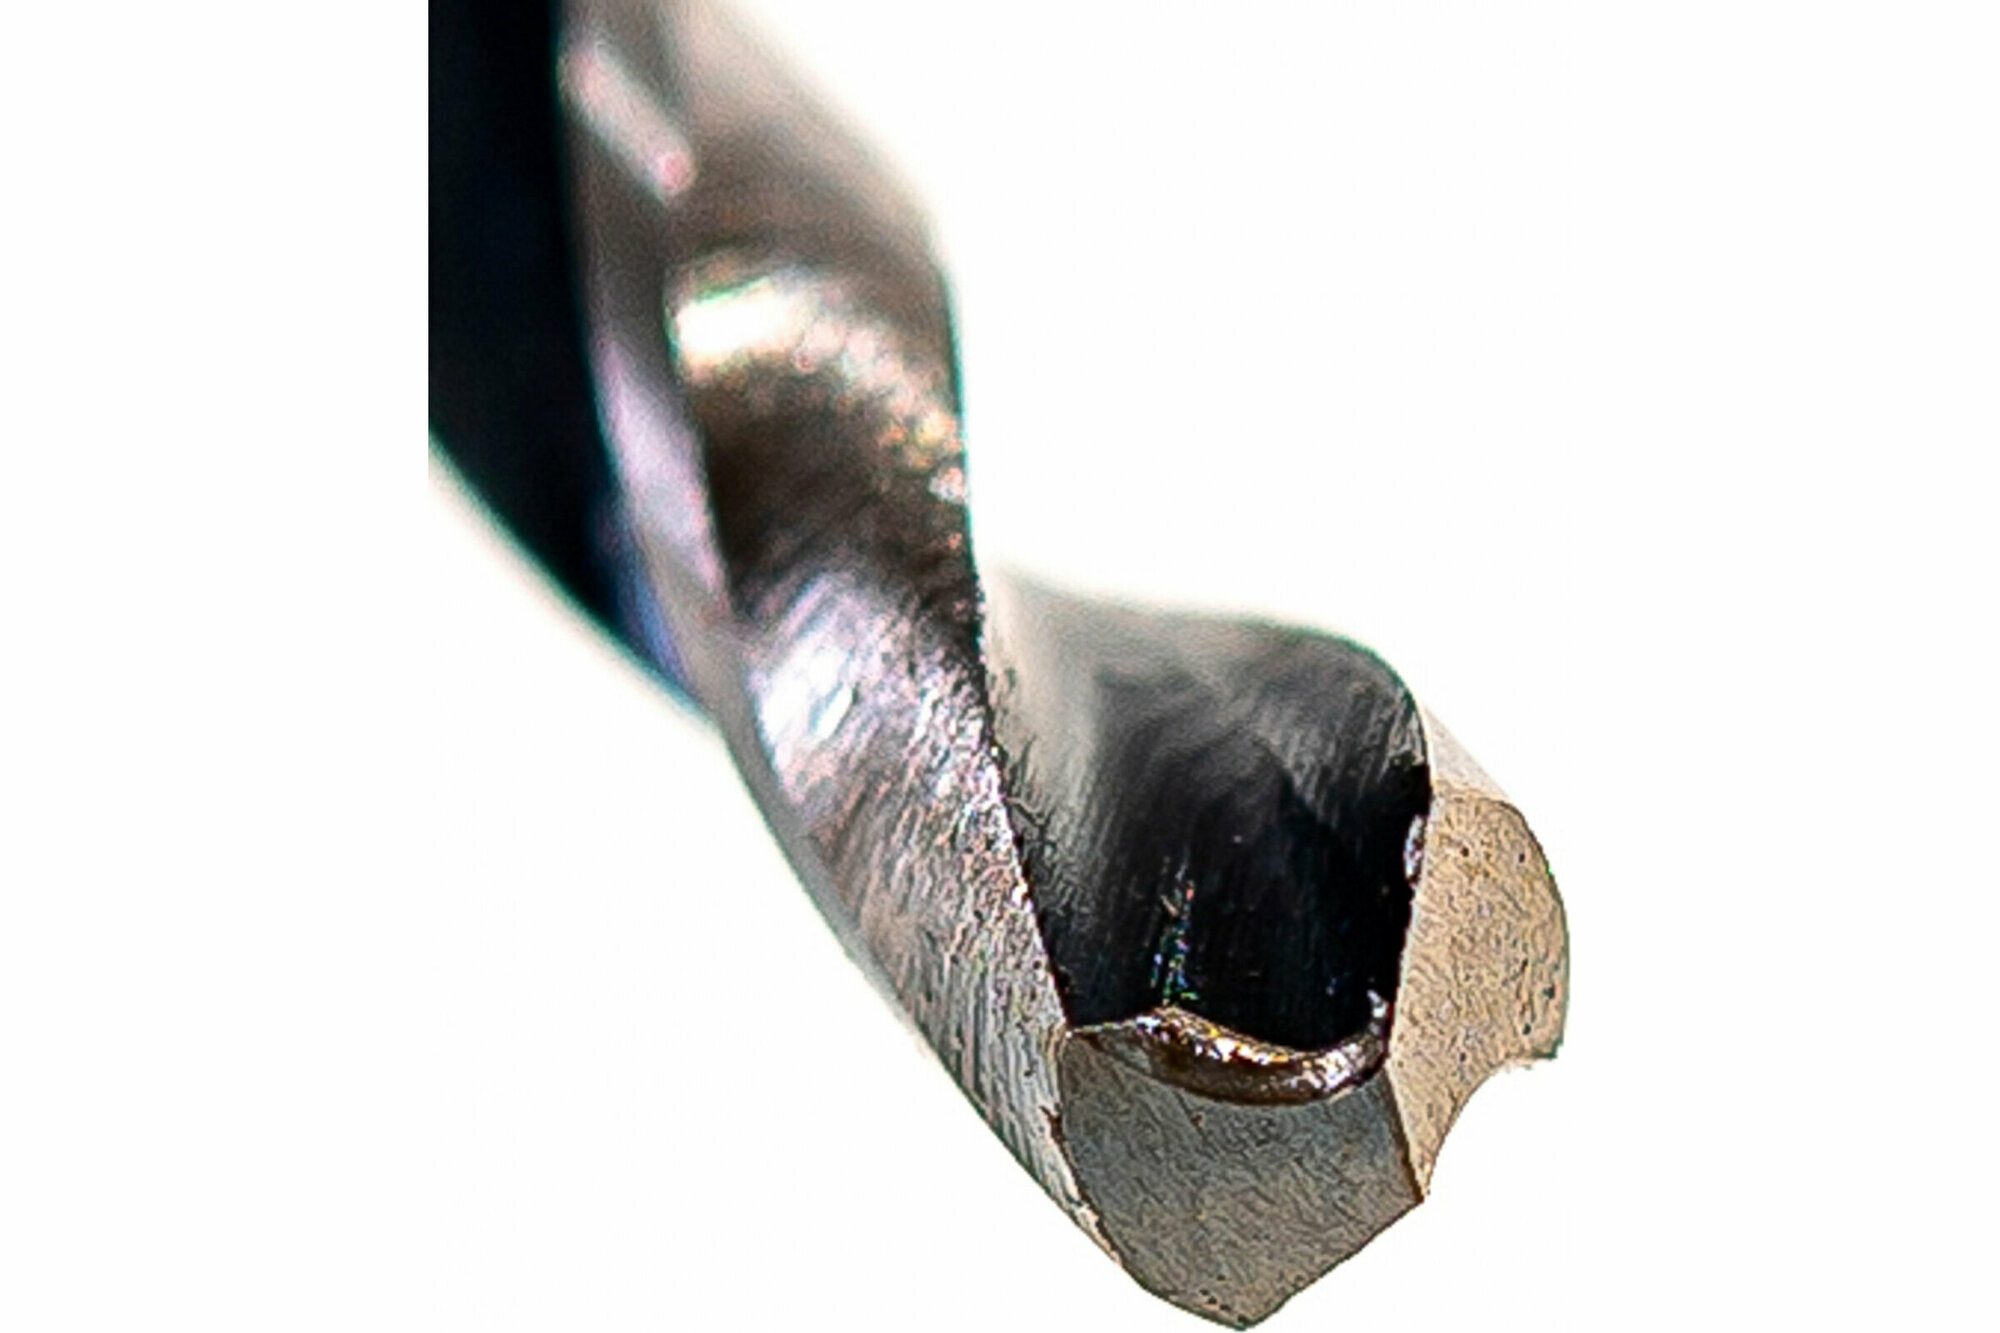 Сверло по металлу Bosch - фото №12